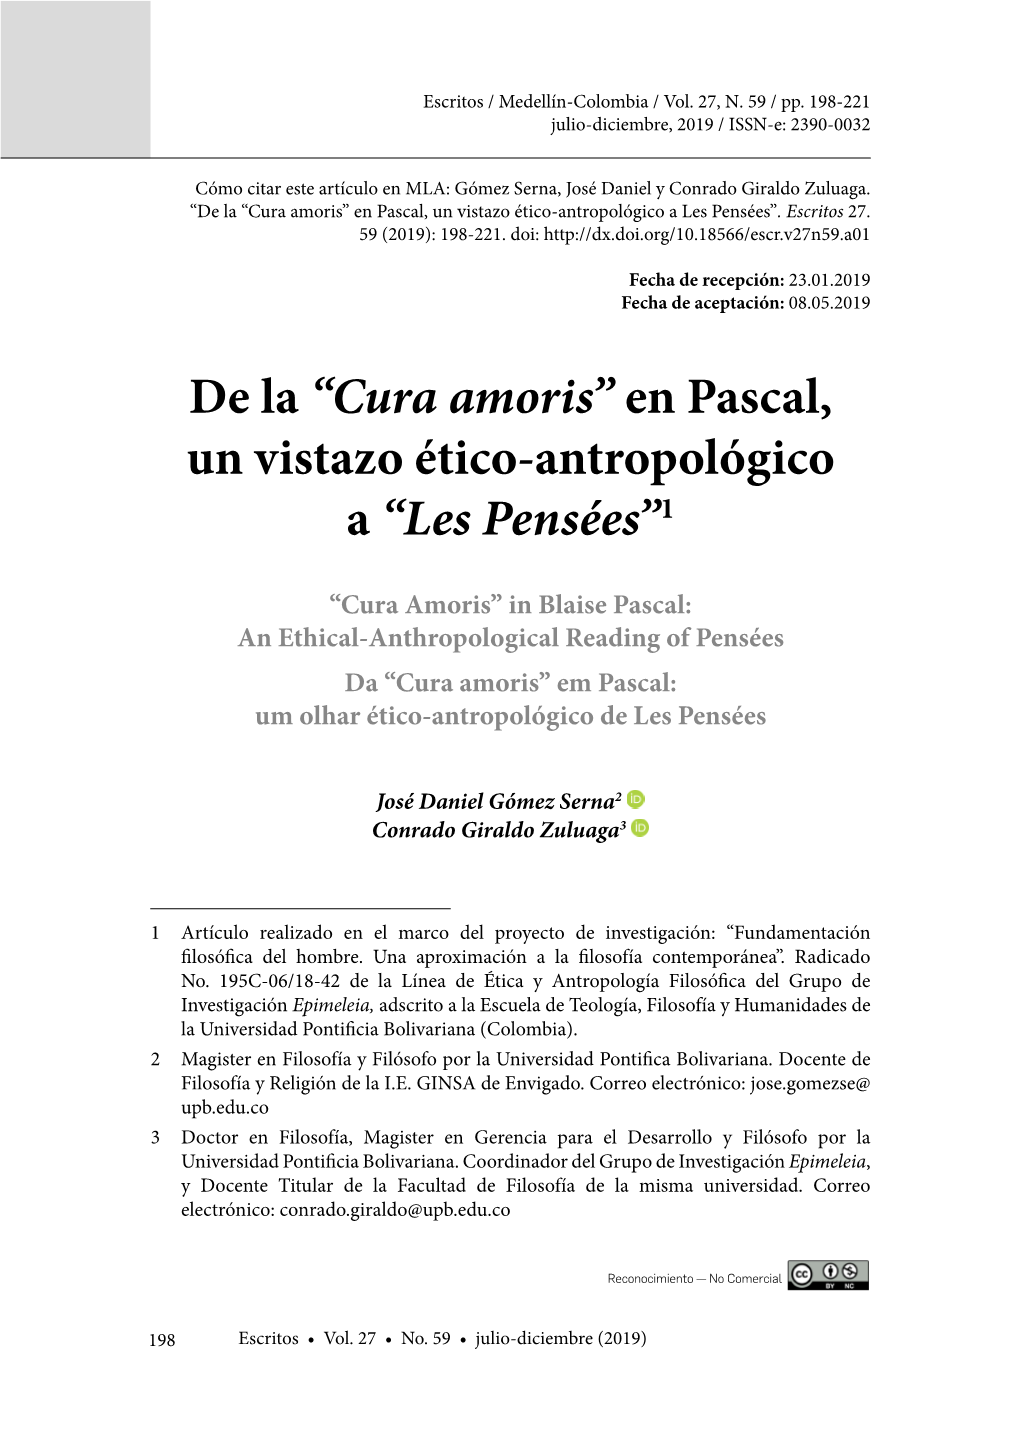 De La “Cura Amoris” En Pascal, Un Vistazo Ético-Antropológico a Les Pensées”